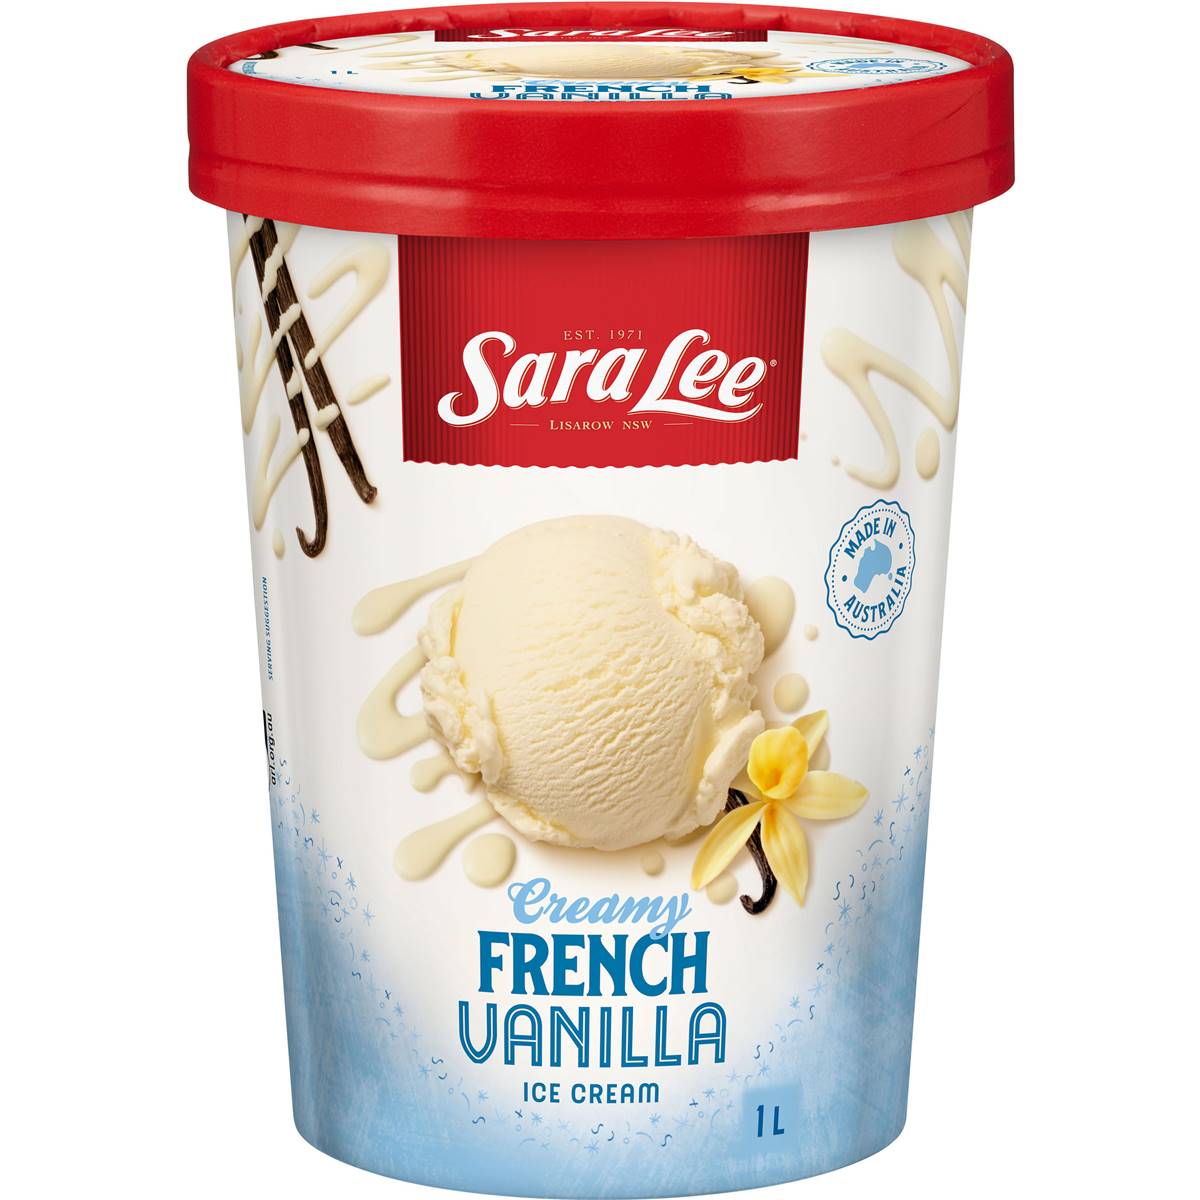 Calories in Sara Lee Ice Cream French Vanilla